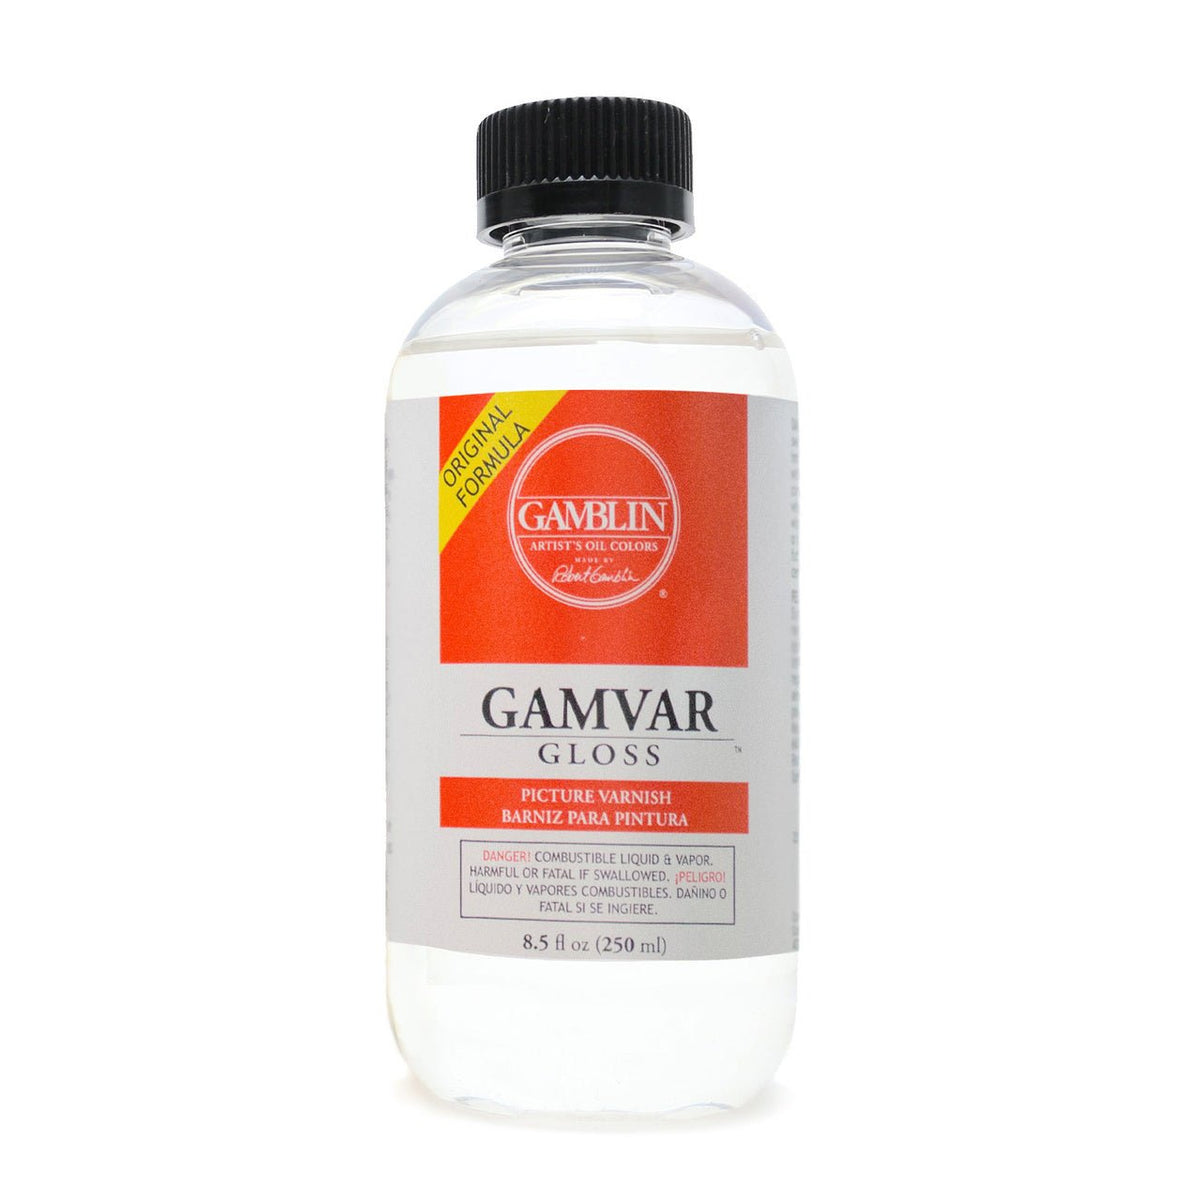 Gamblin Gamvar Picture Varnish - Gloss 8.5 fl oz. - merriartist.com